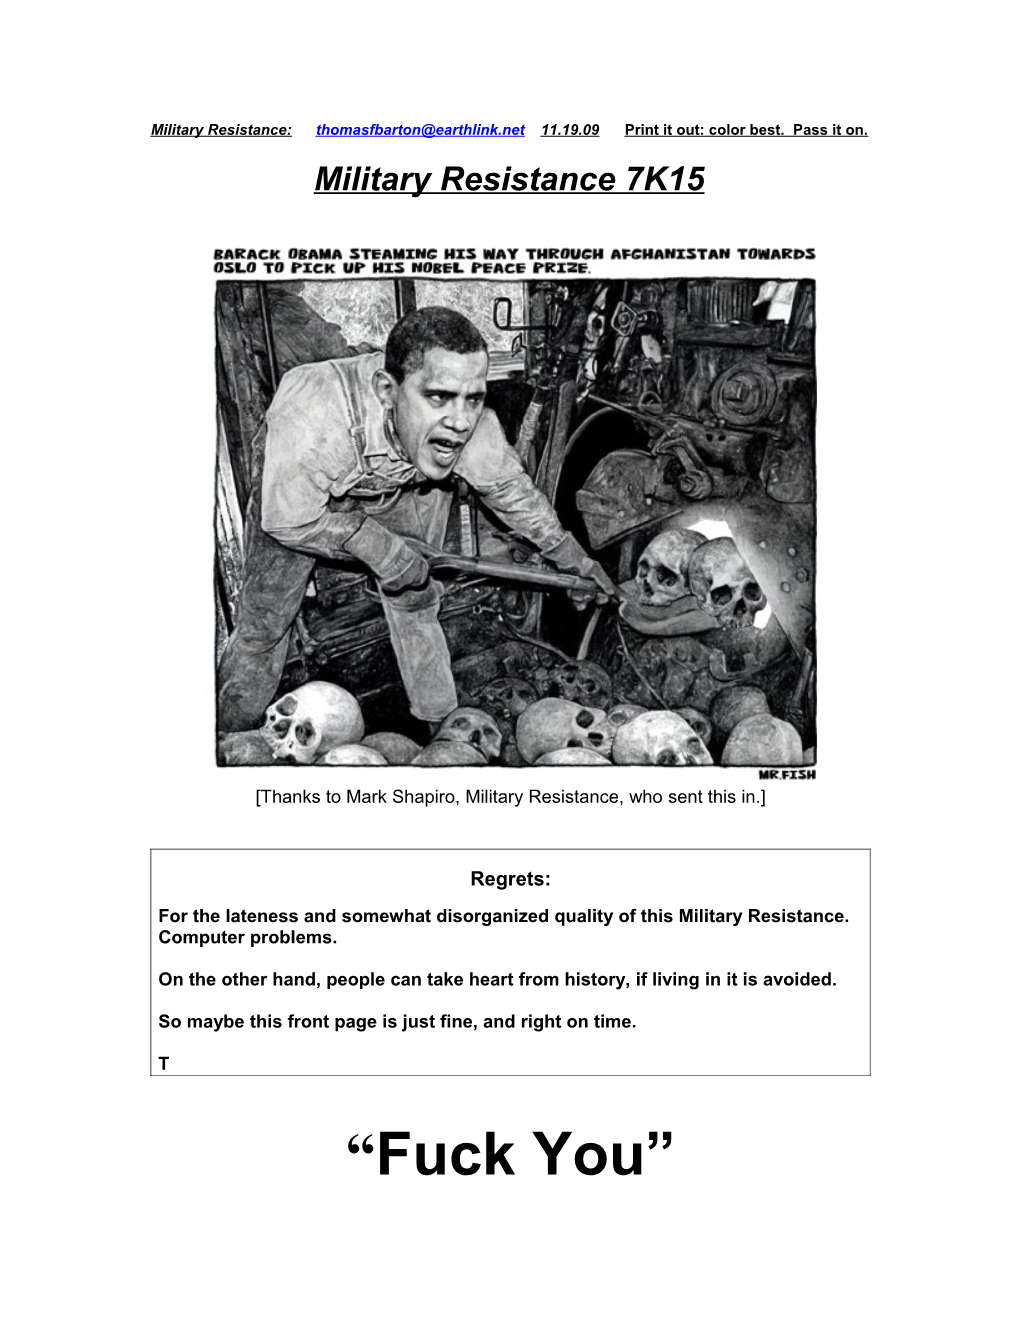 Military Resistance 7K15